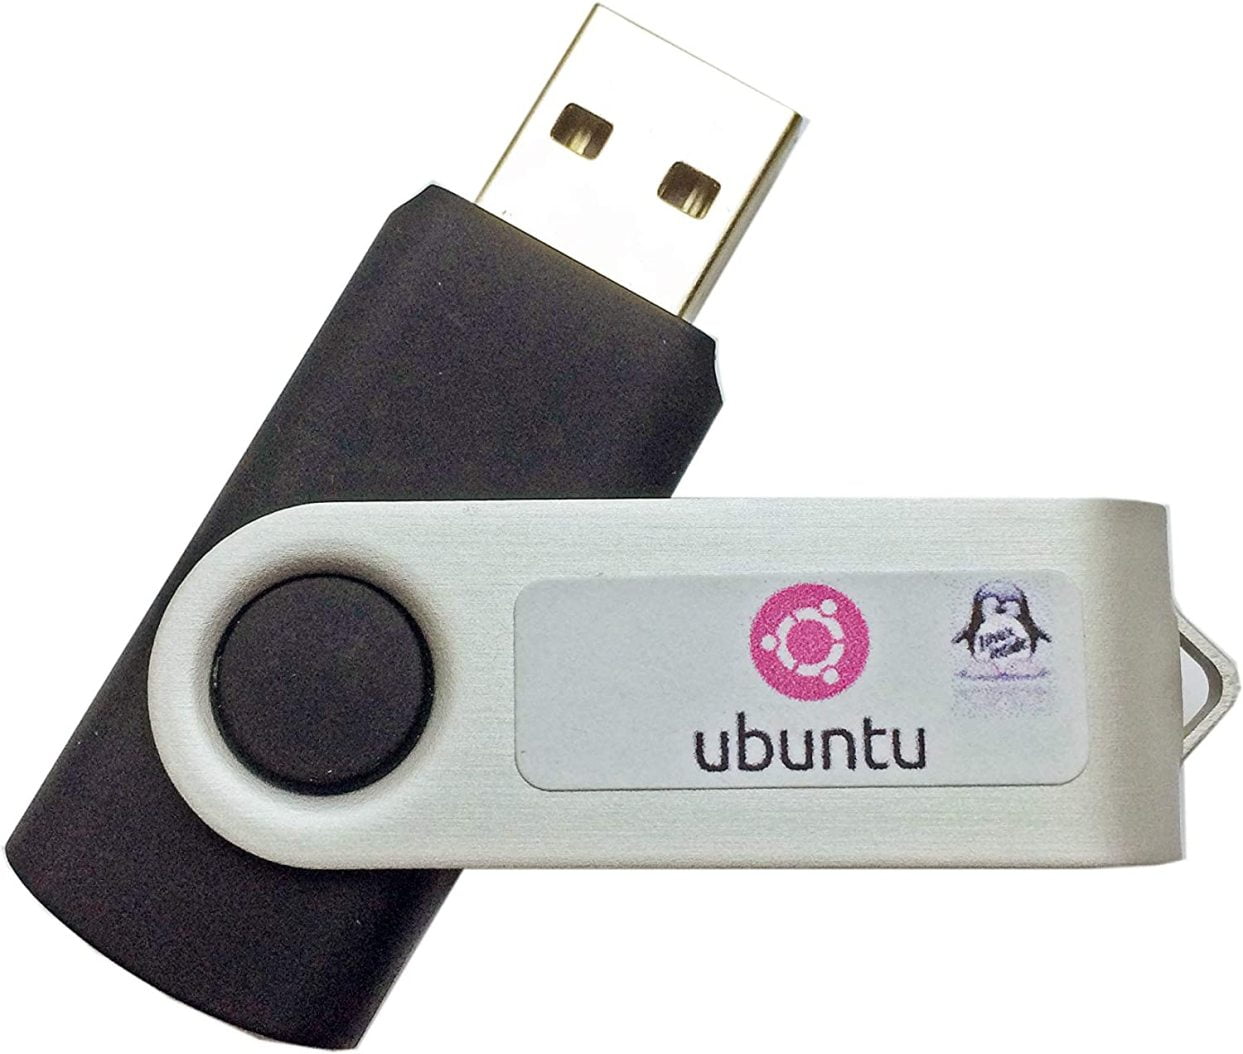 Linux Ubuntu Bionic Beaver 18.04 + 17.04 Desktop/Server + Boot Repair Disk 64bit - Linux/Windows Repair Utility Multiboot Live System Install Bootable Boot USB Flash Thumb Drive -